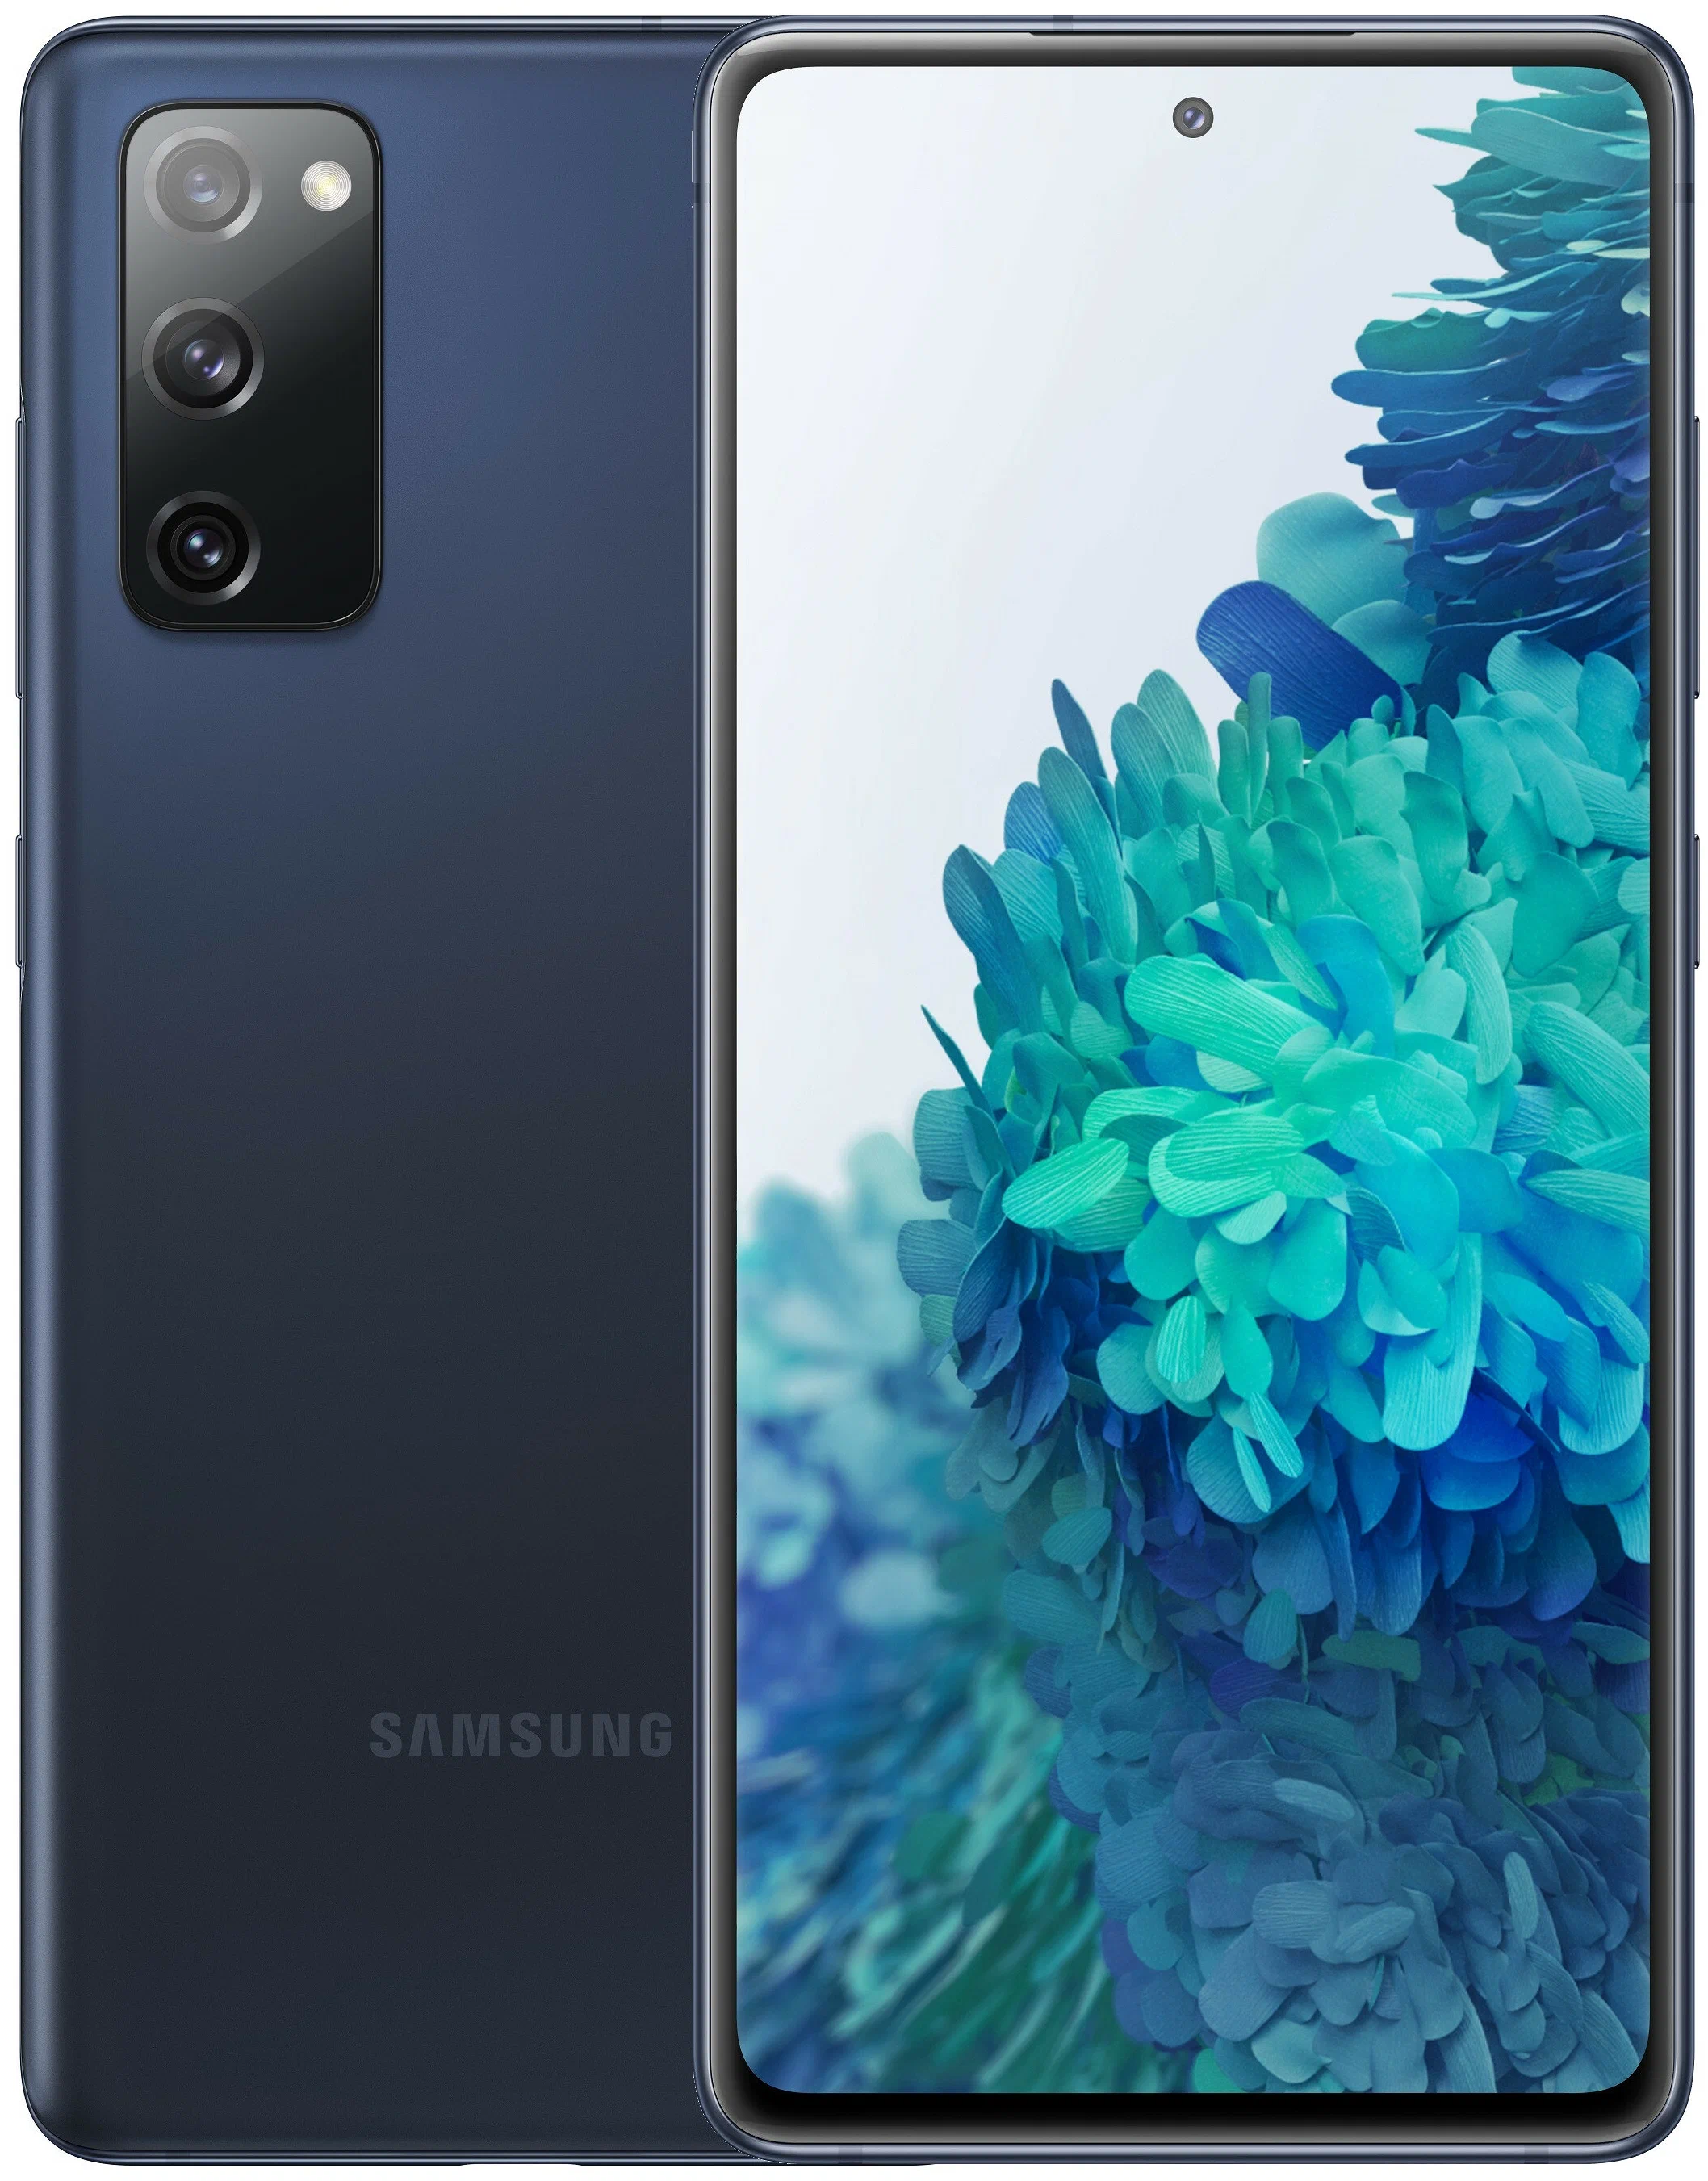 Samsung Galaxy S20 FE (SM-G780F) - экран: 6.5" (2400x1080) Super AMOLED 120 Гц